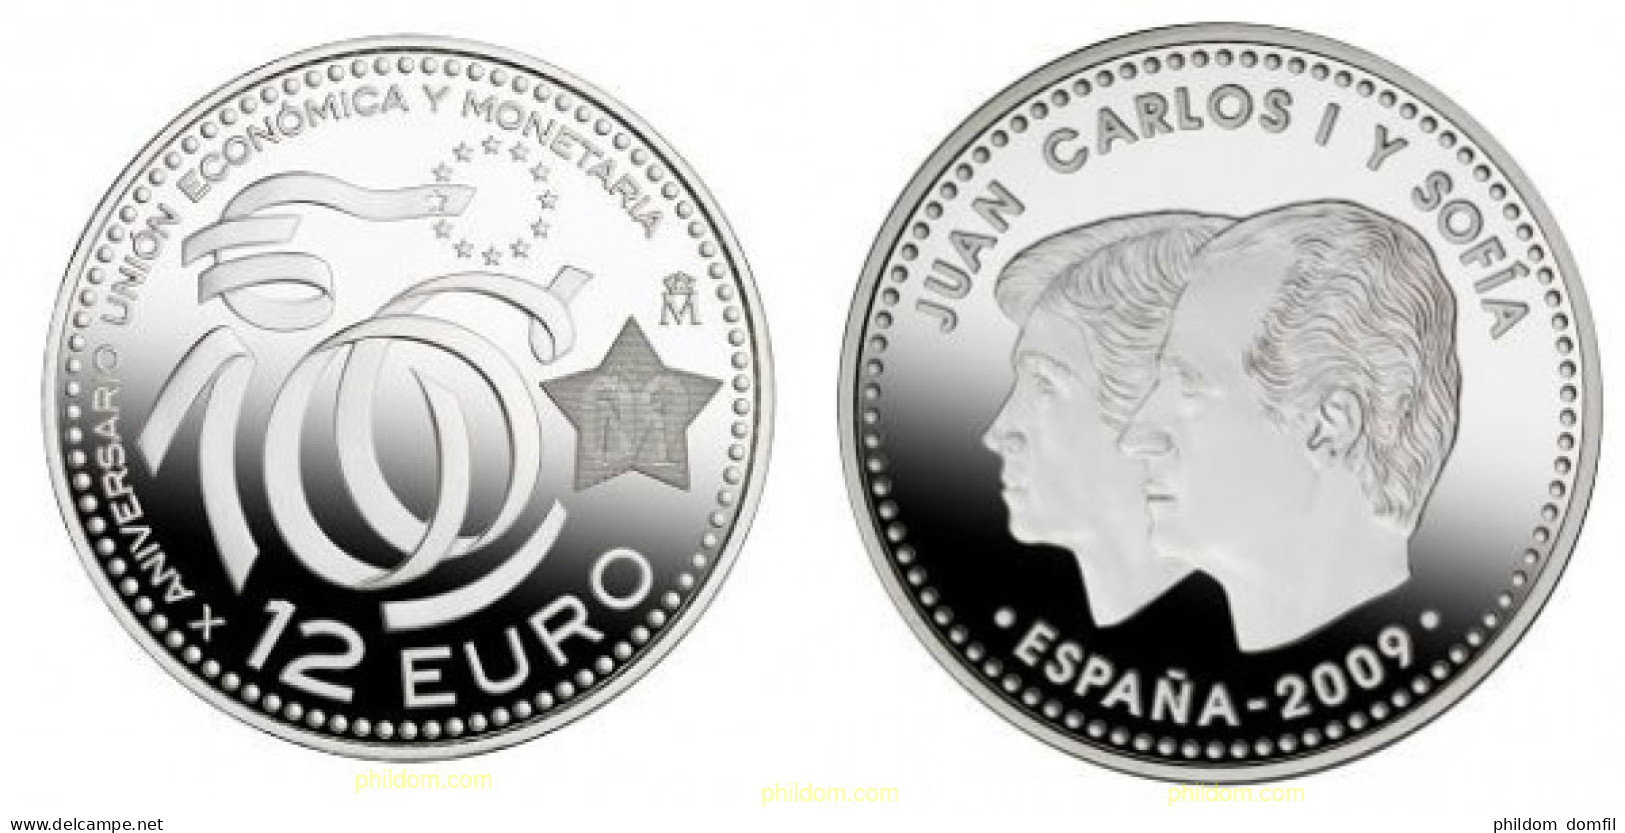 1811 ESPAÑA 2009 12 EUROS - 2009 - X ANIV. UNION MONETARIA - 10 Centimos